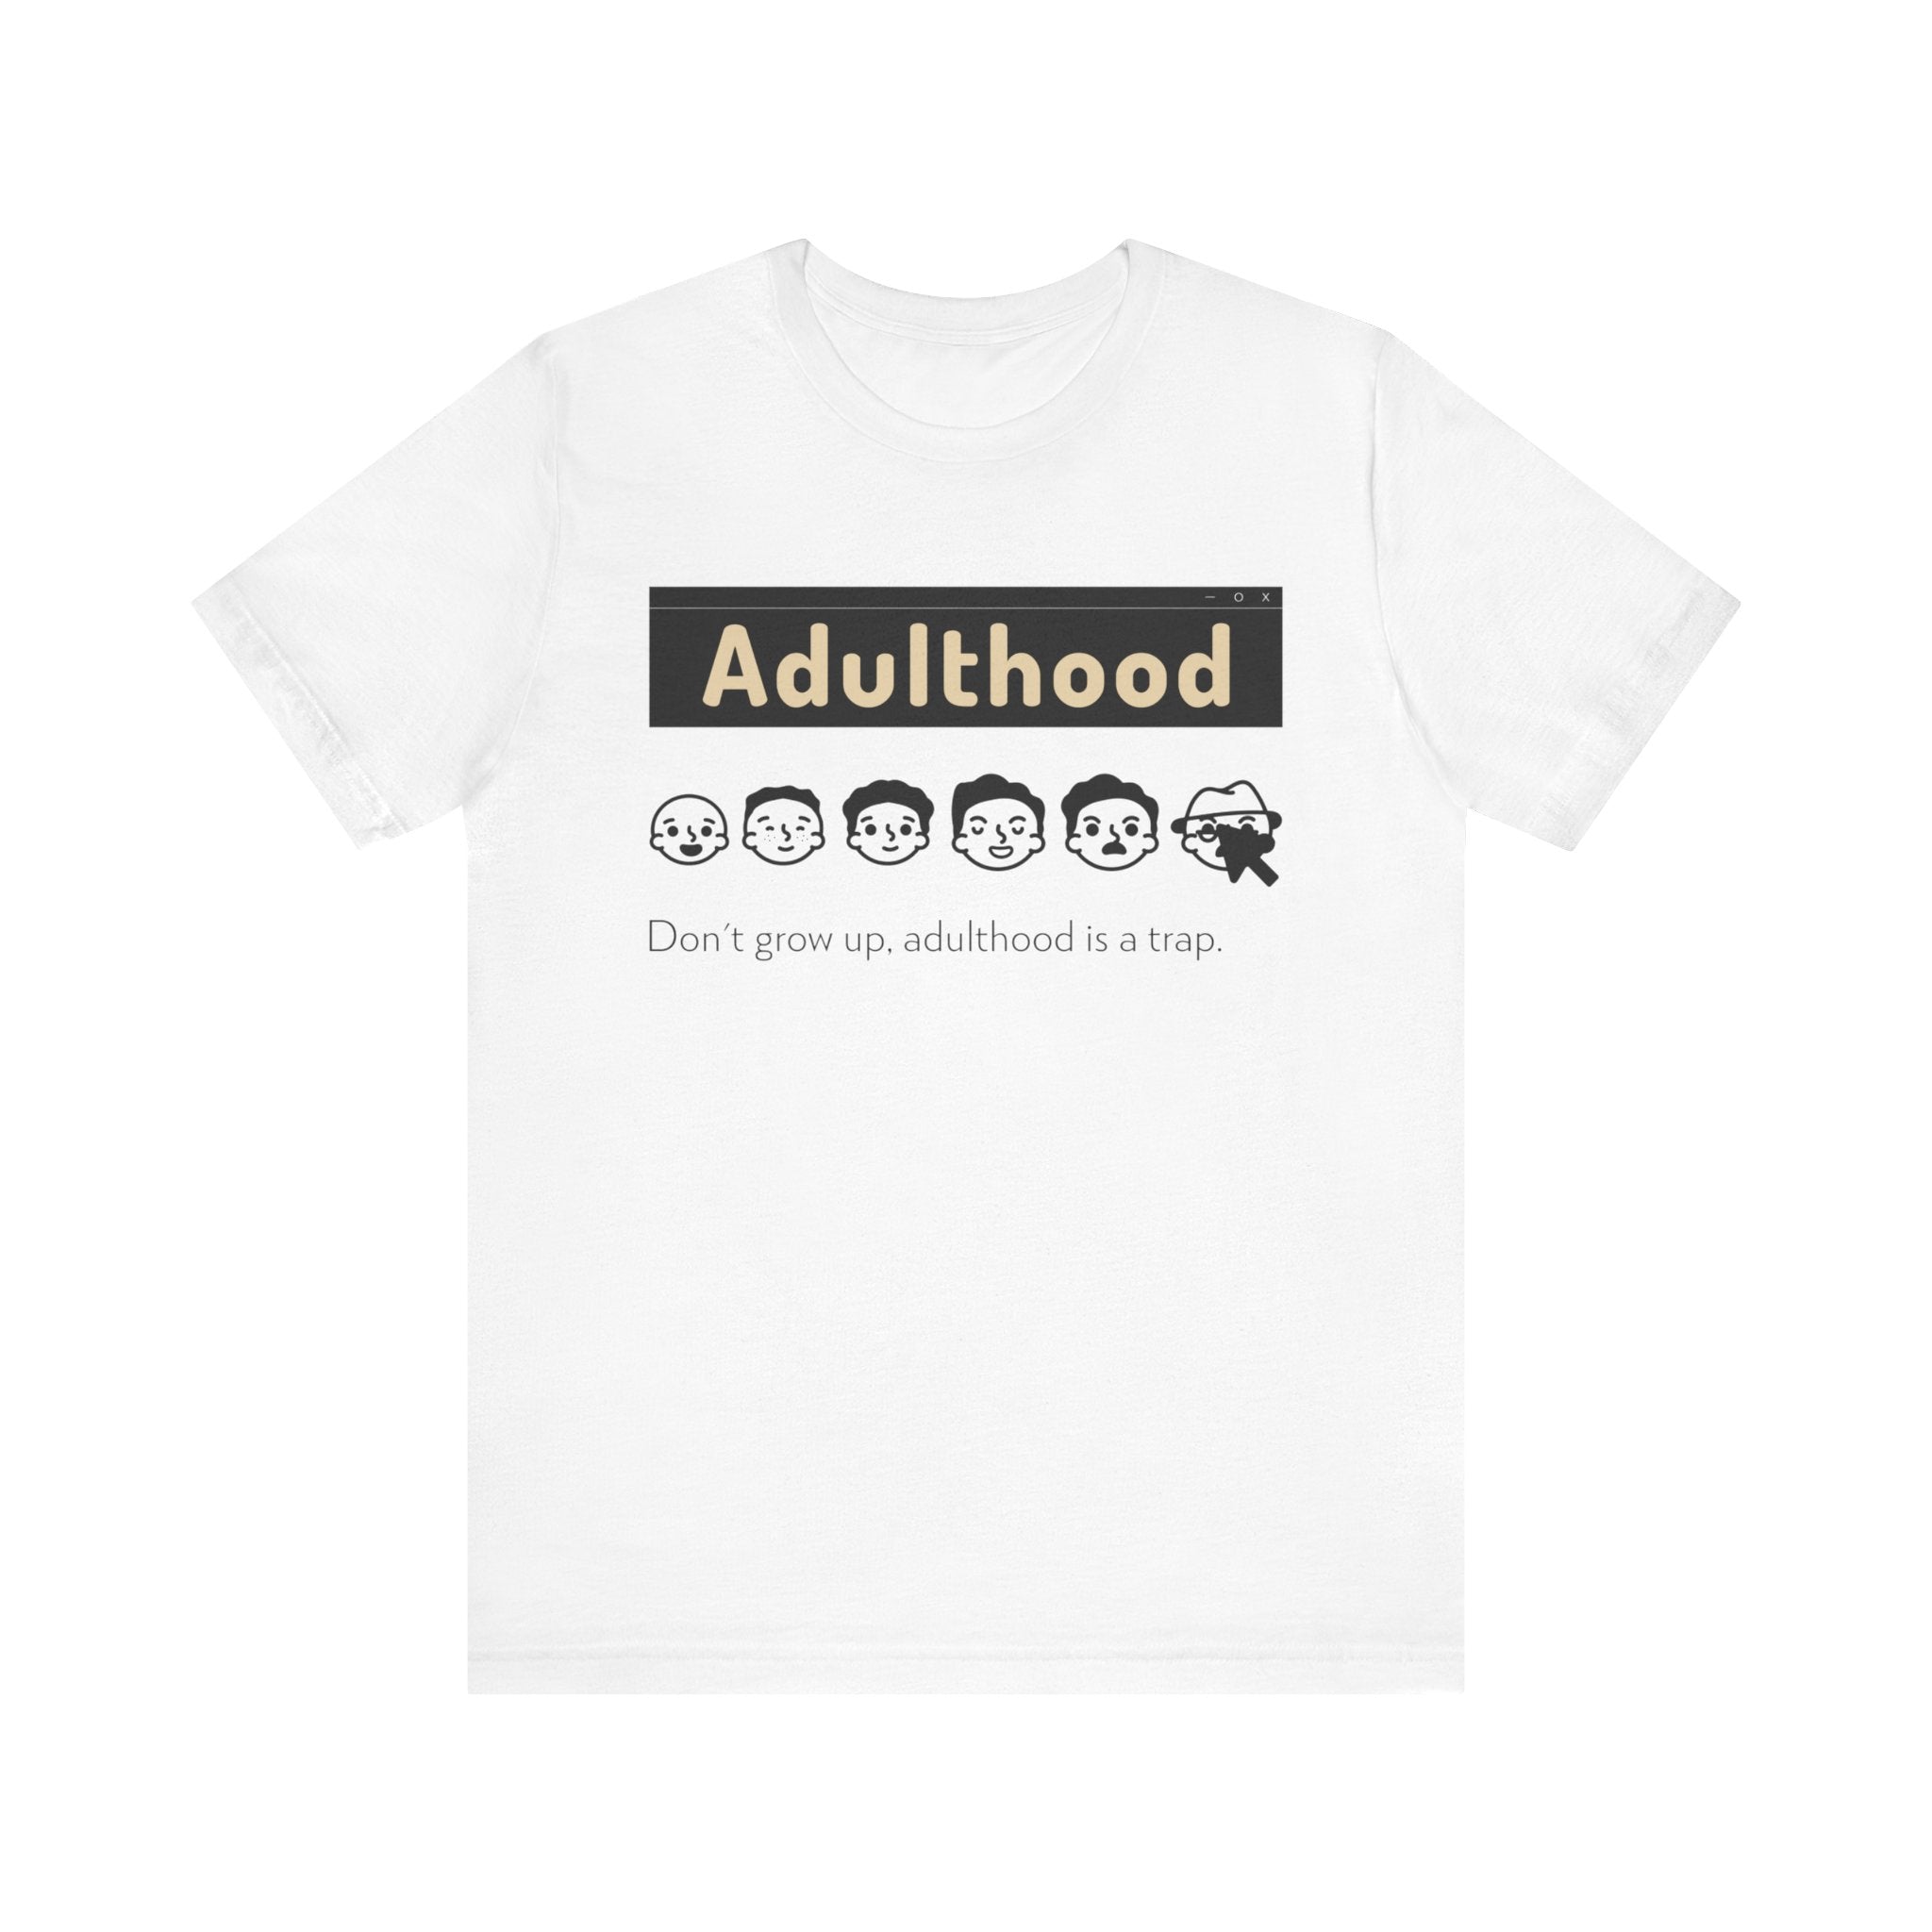 Adulthood is a Trap - T-Shirt